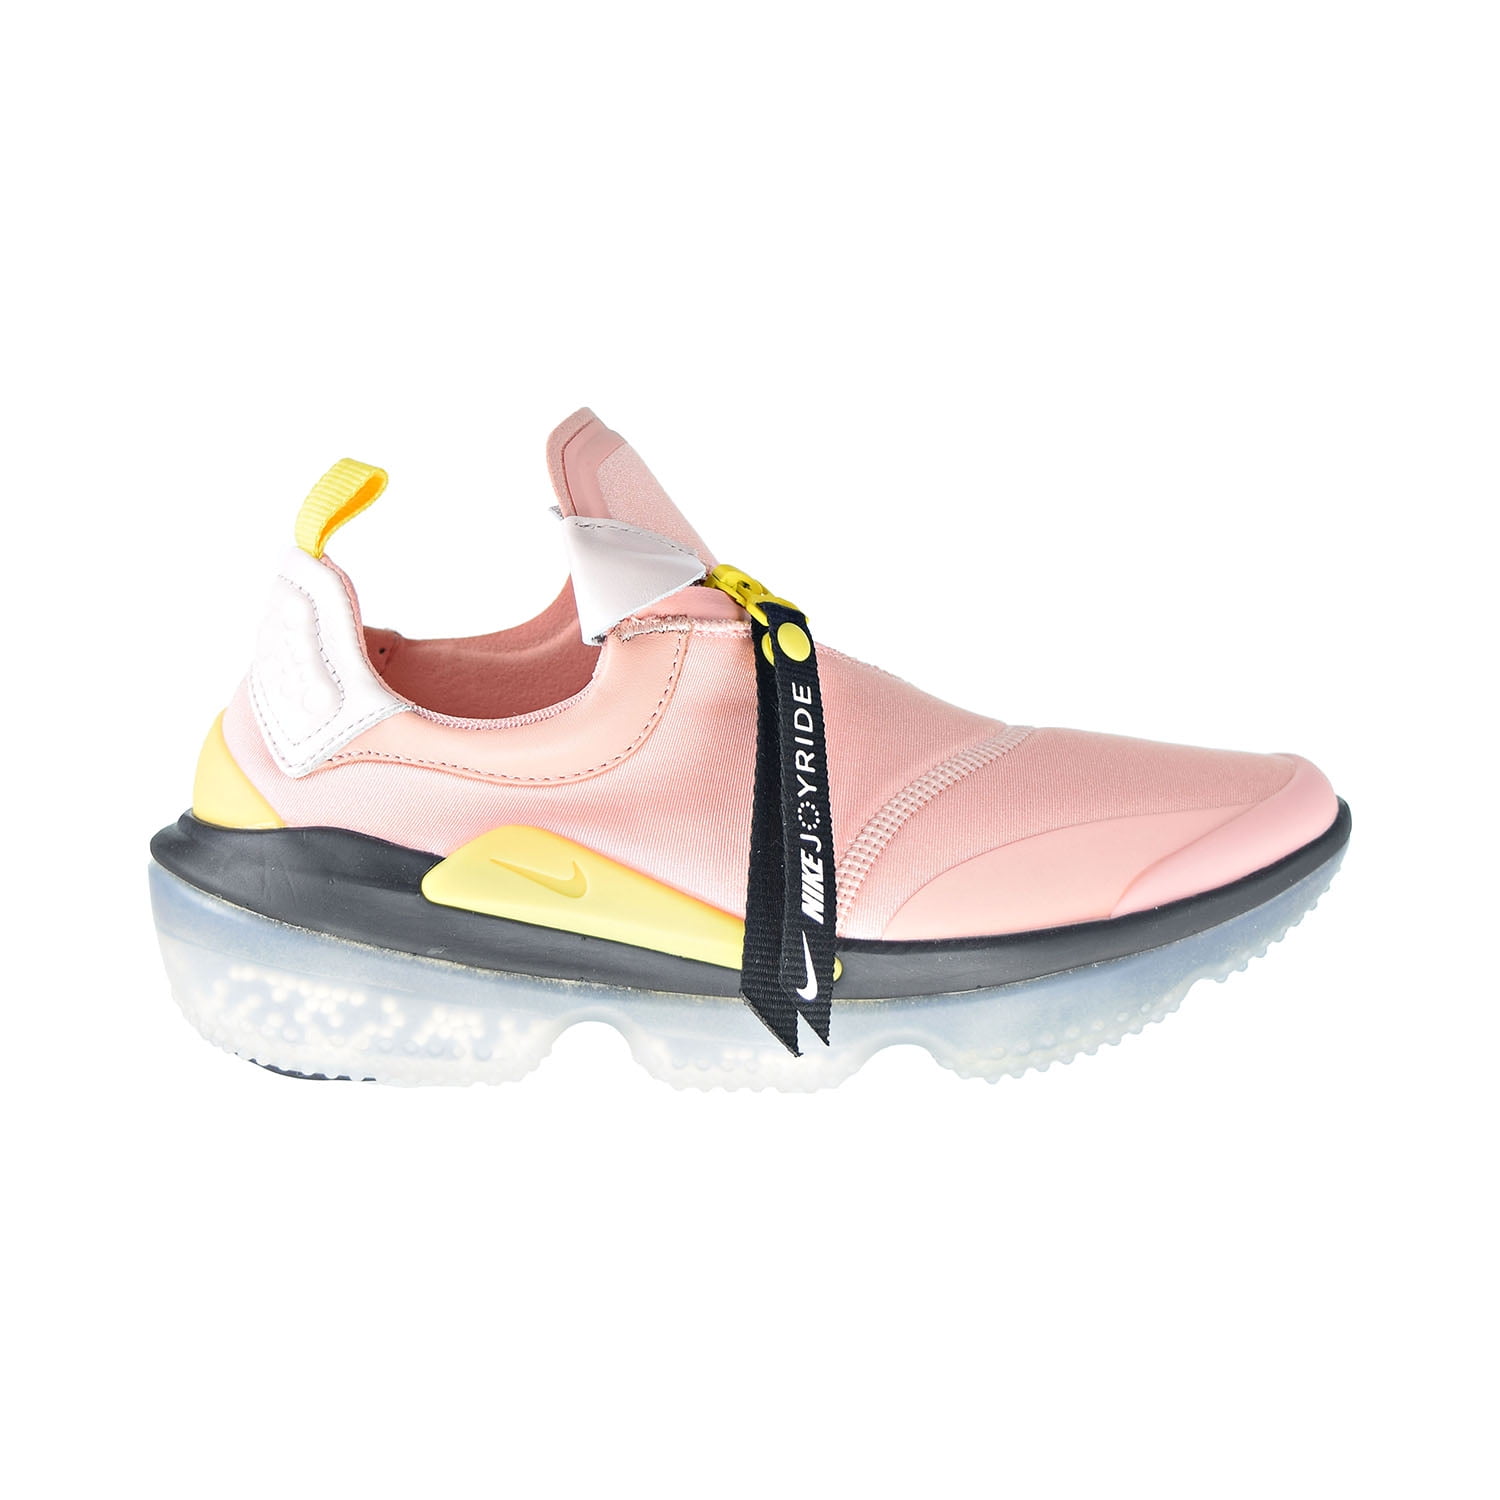 dodelijk Bevoorrecht barrière Nike Joyride Optik Women's Shoes Coral Stardust-Chrome Yellow aj6844-600 -  Walmart.com